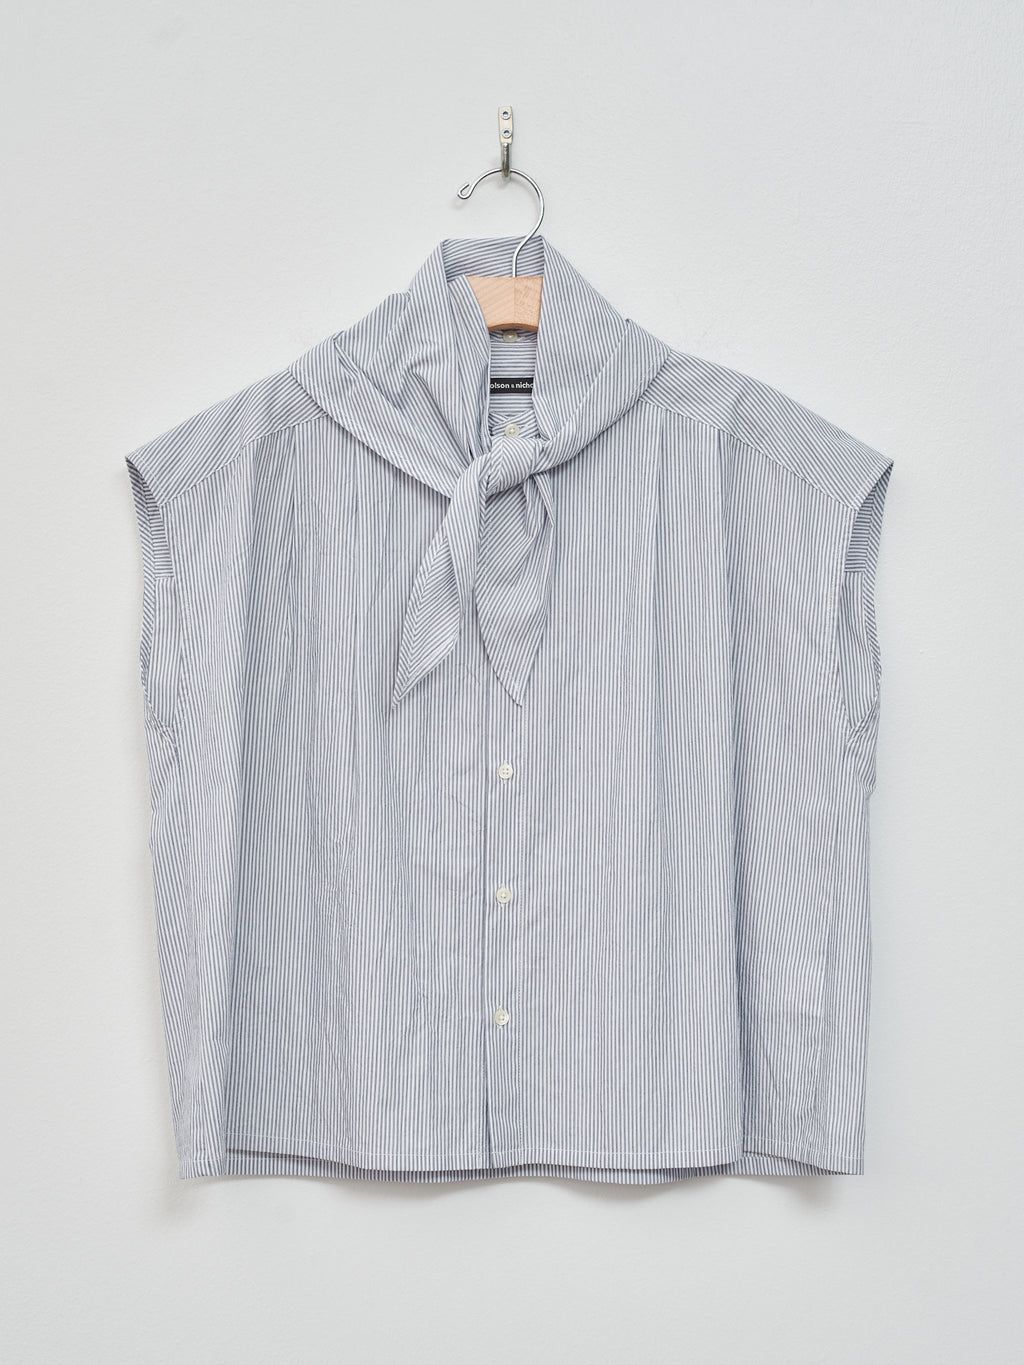 Namu Shop - Nicholson & Nicholson Smile Shirt - Blue Stripe